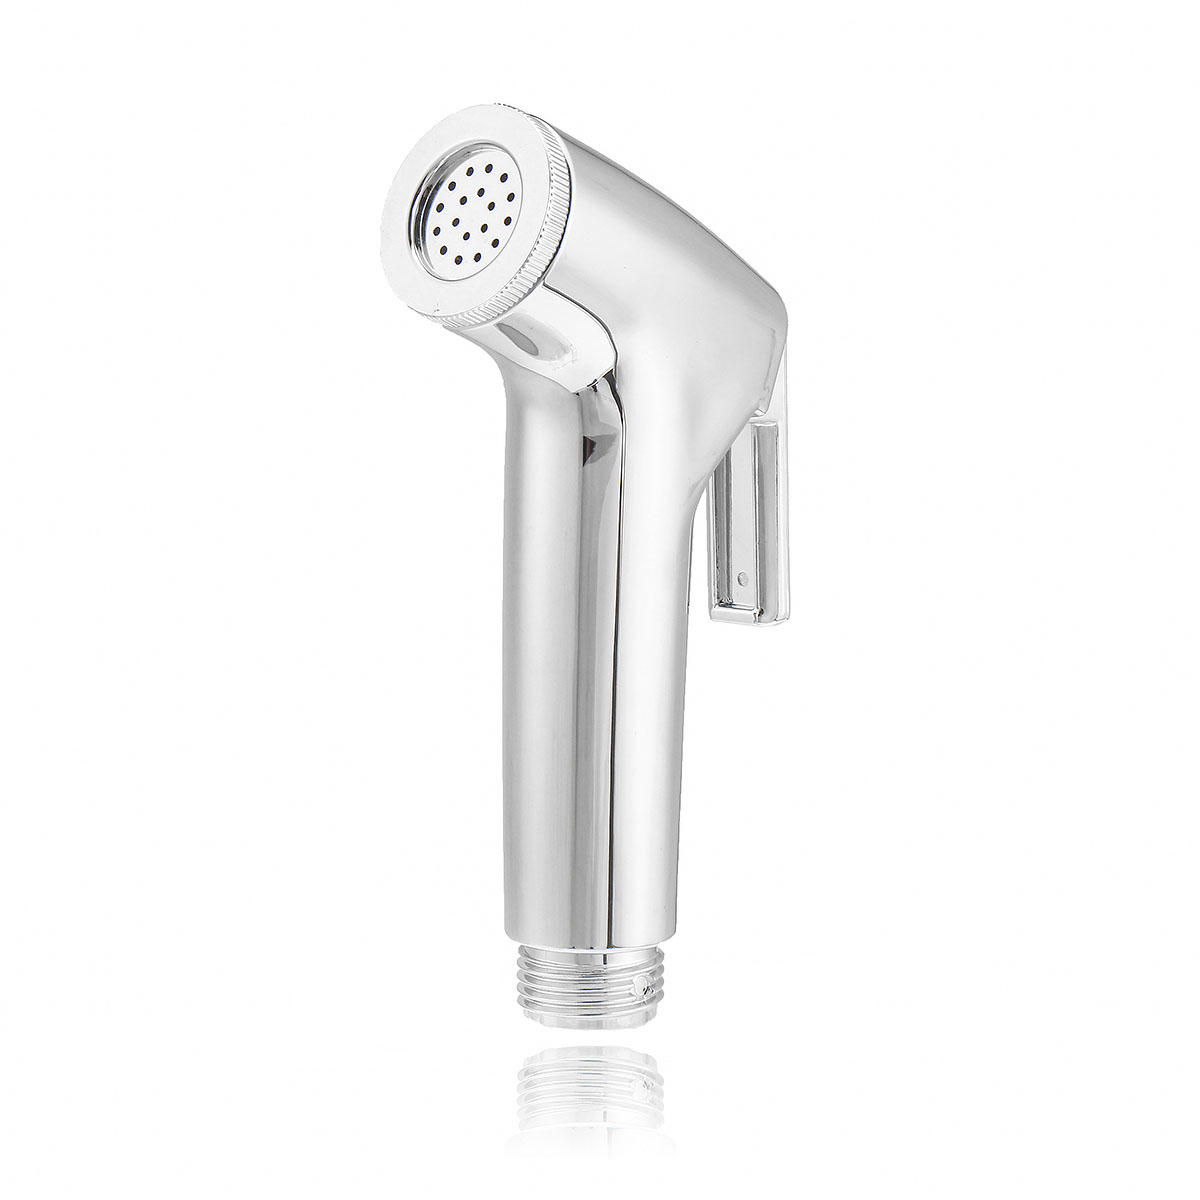 

ABS Handheld Bathroom Bidet Portable Pressurized Toilet Bidet Spray Shower Head Water Nozzle Sprayer Cloth Diaper Spraye